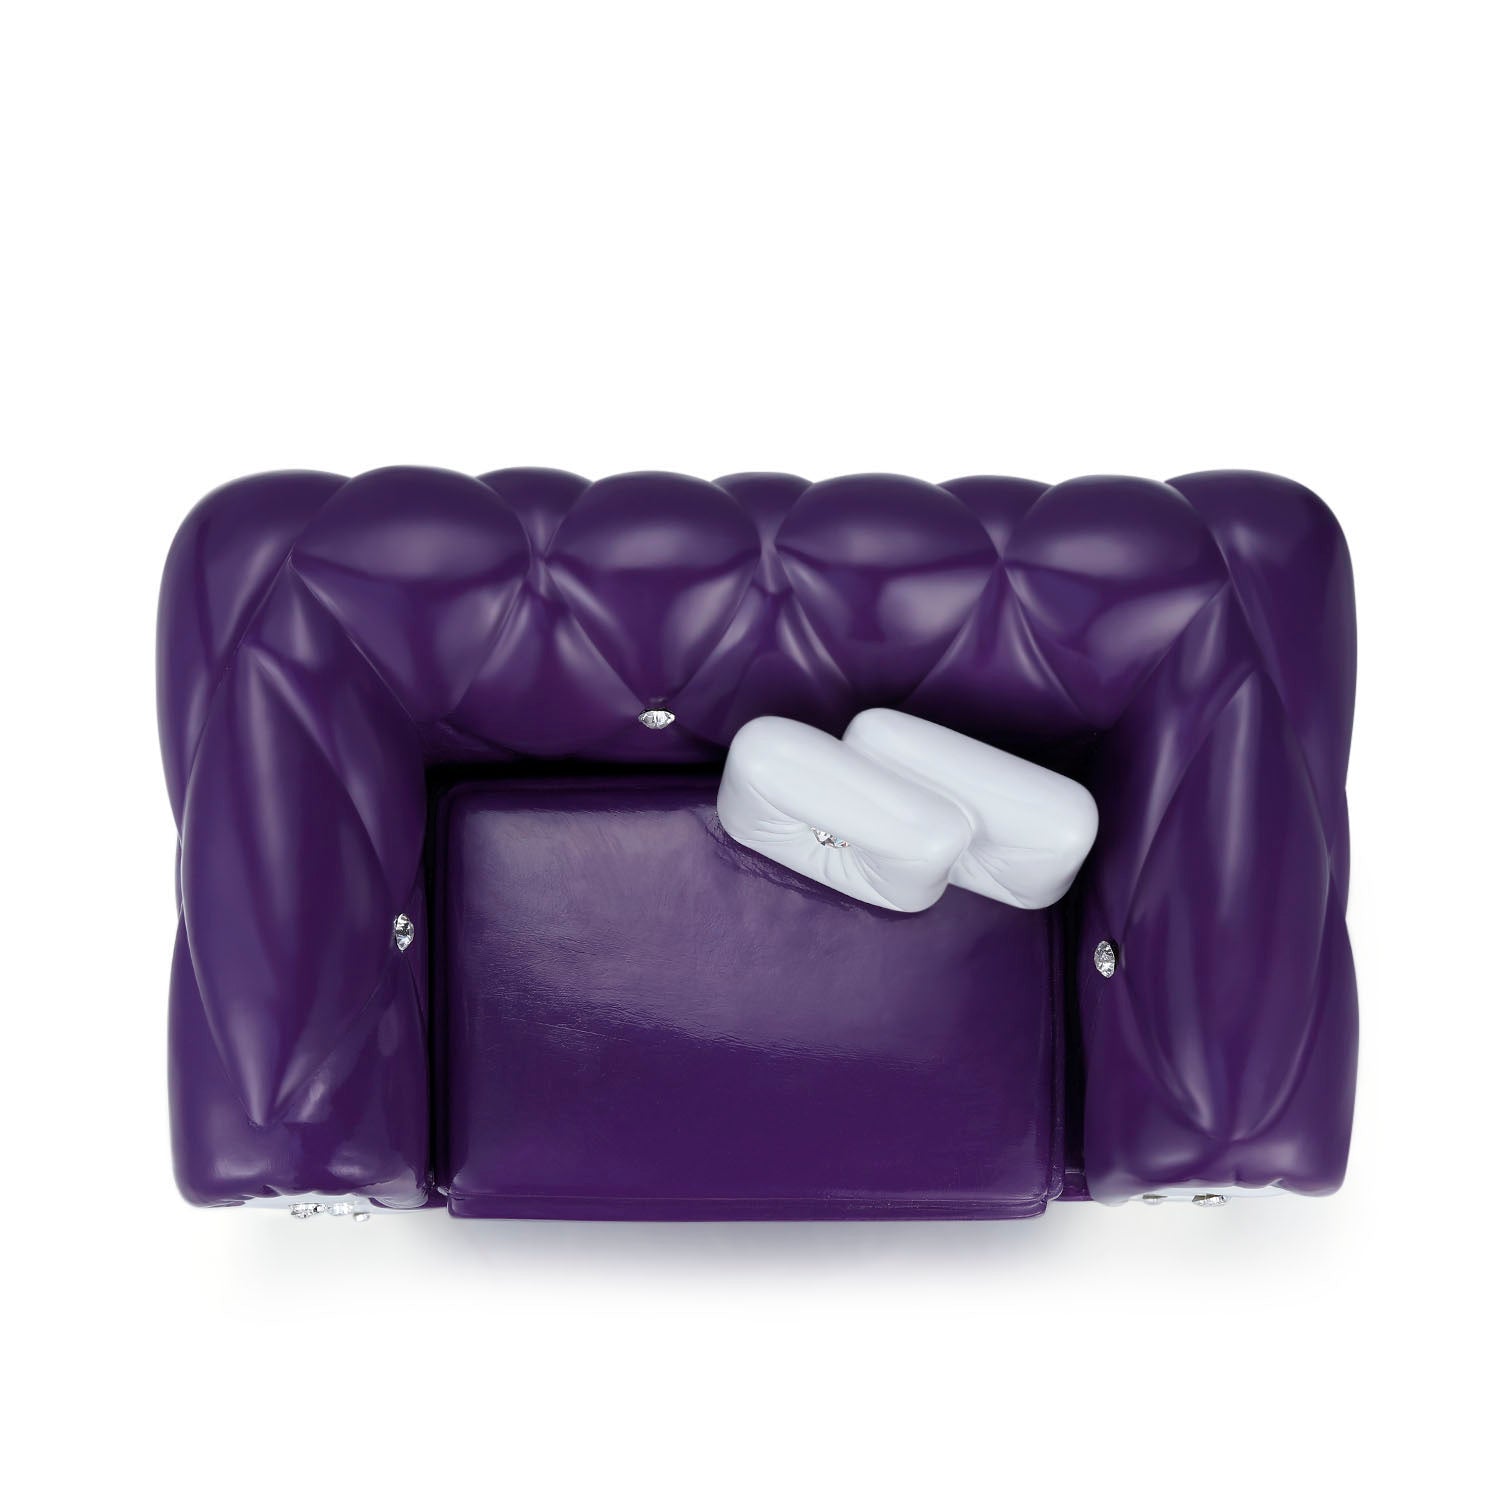 Nice Resin Sofa shape purple Jewelry Box